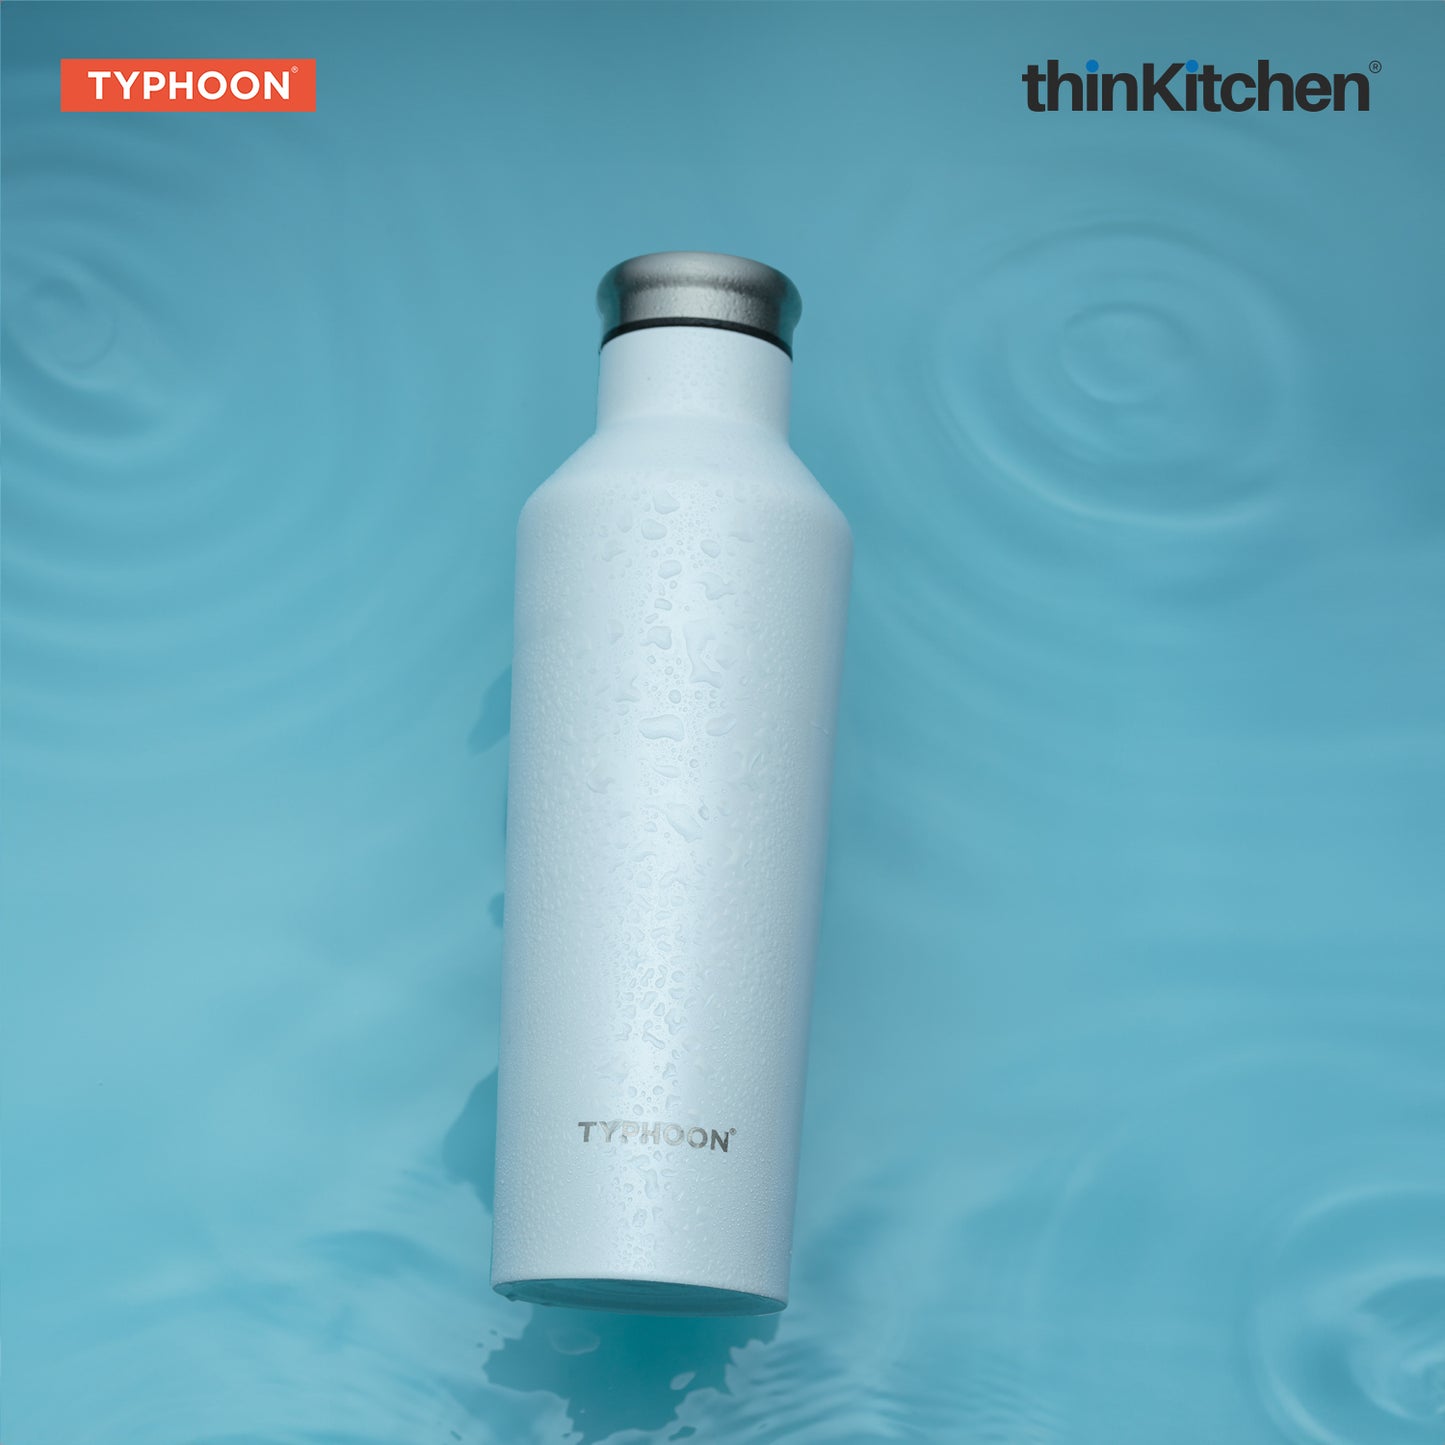 Typhoon Pure Single Wall Bottle White 800ml